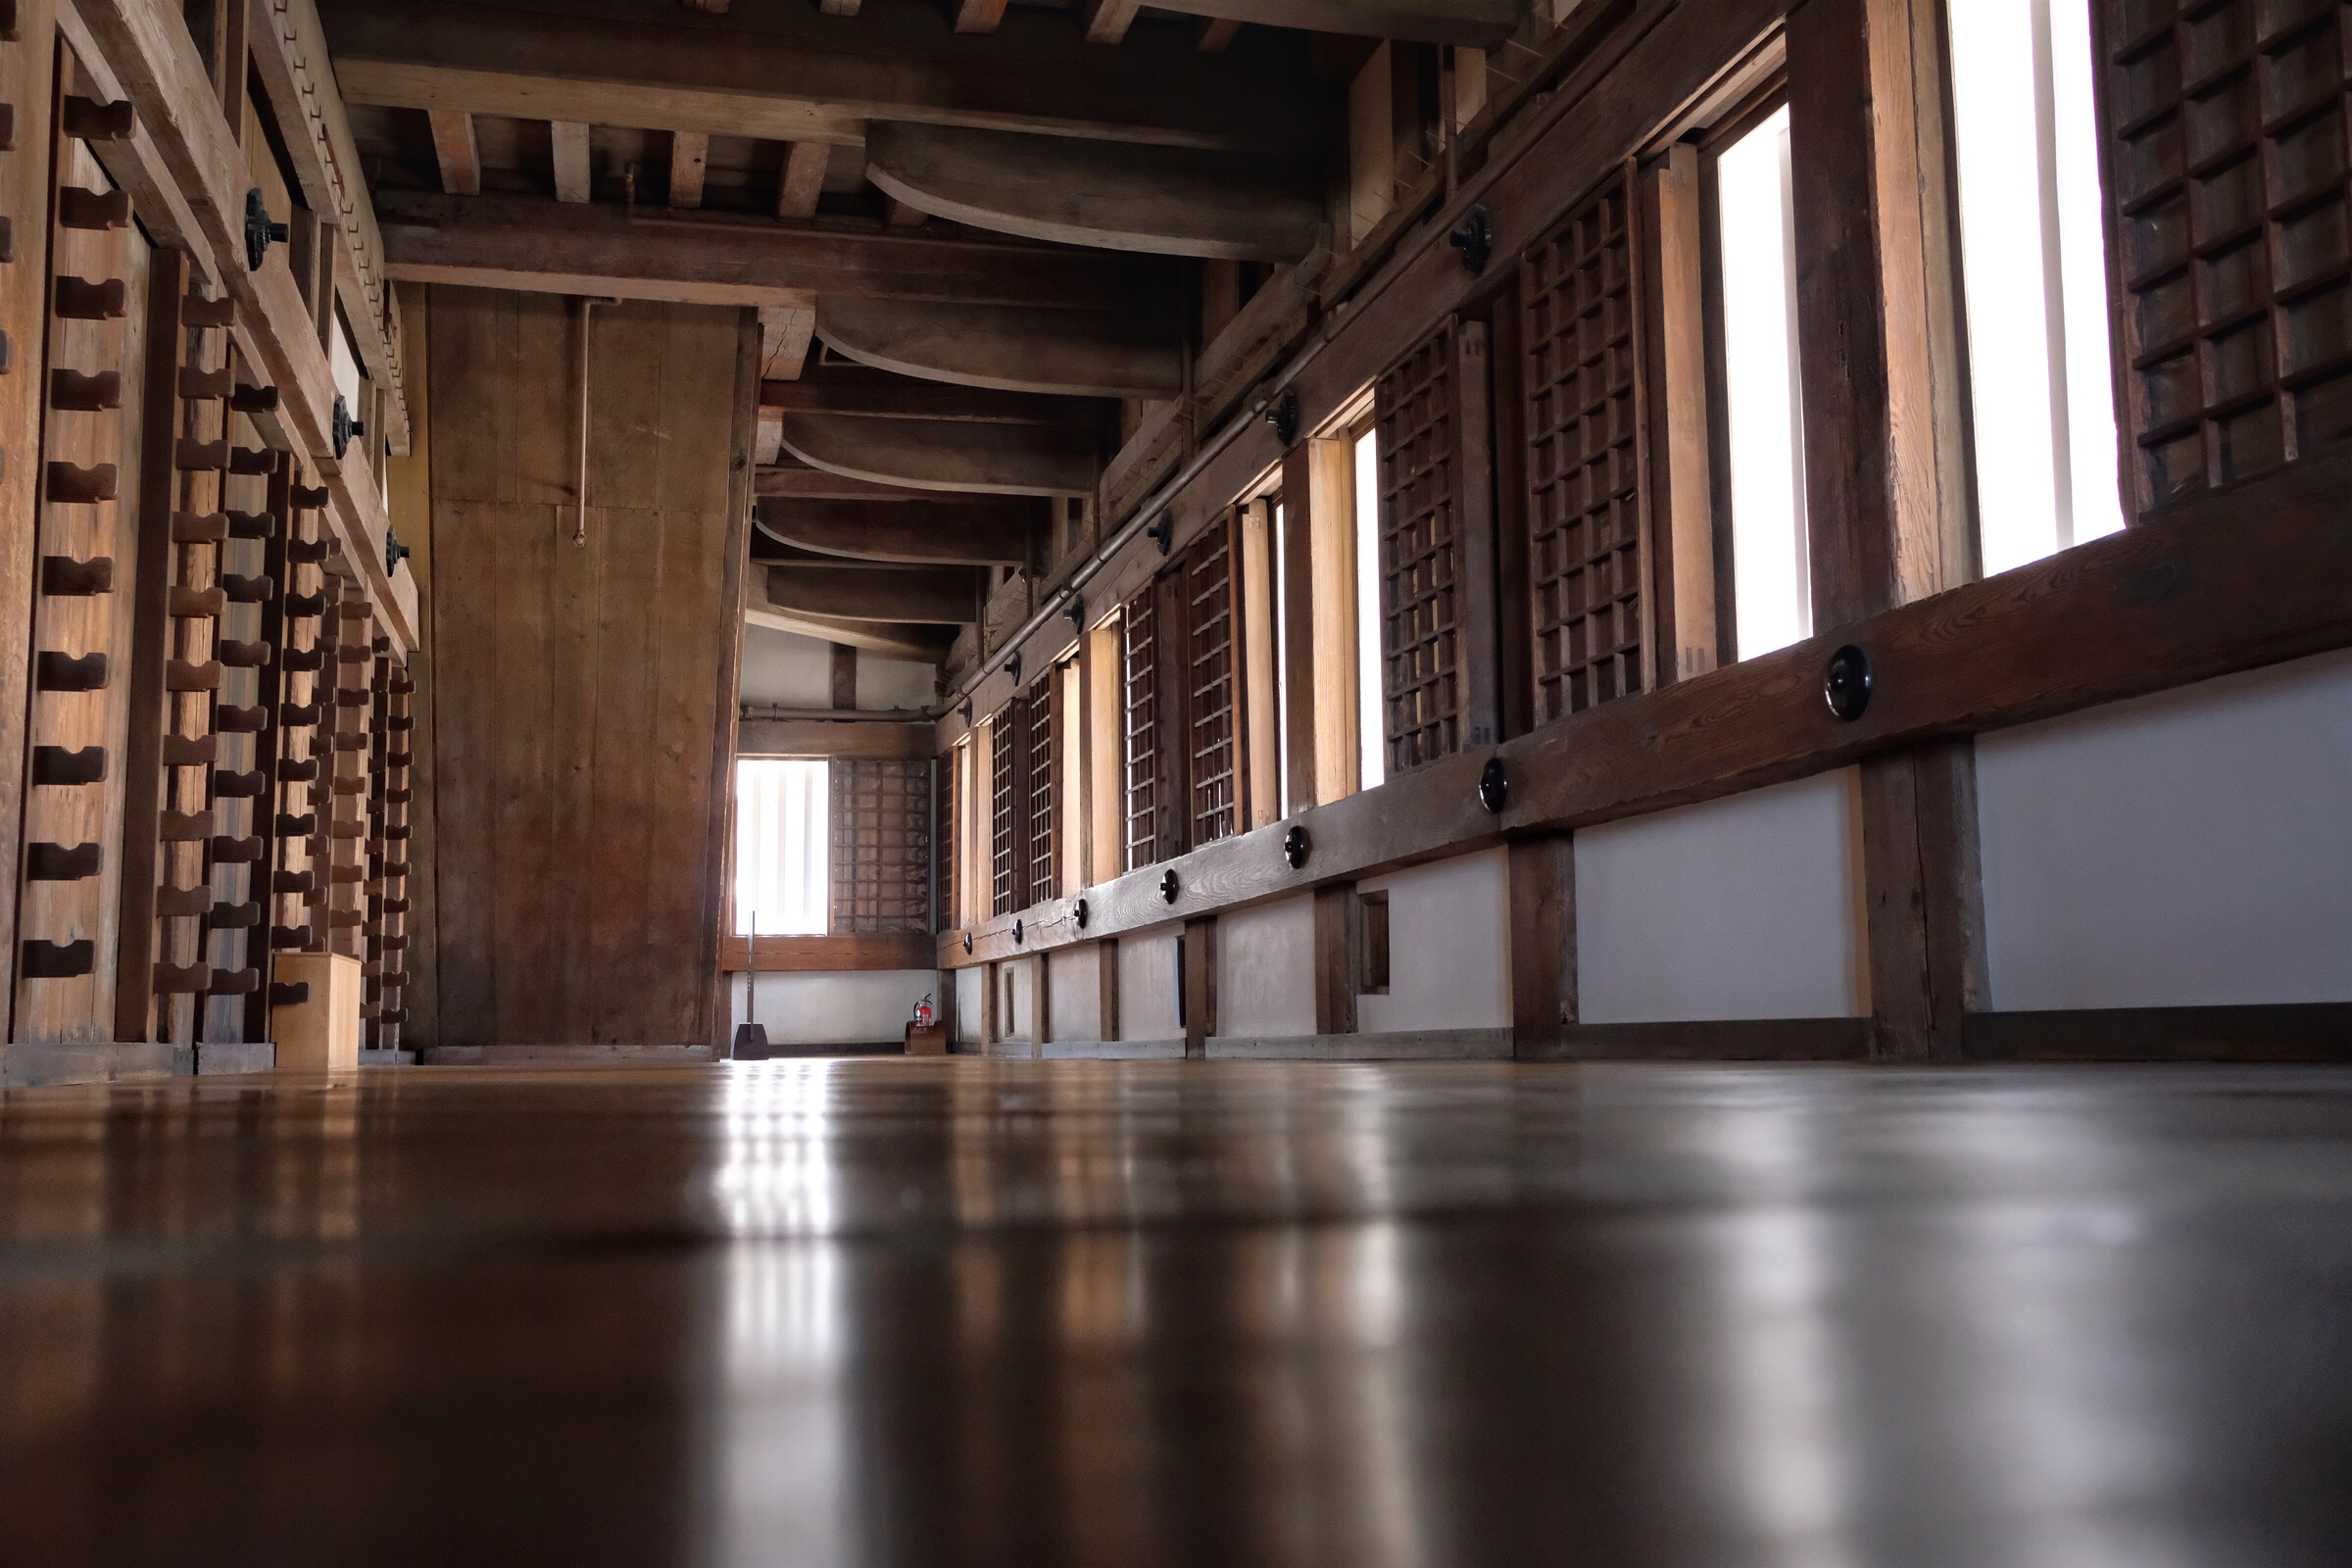 Japan - Himeji - Himeji Castle - Inside